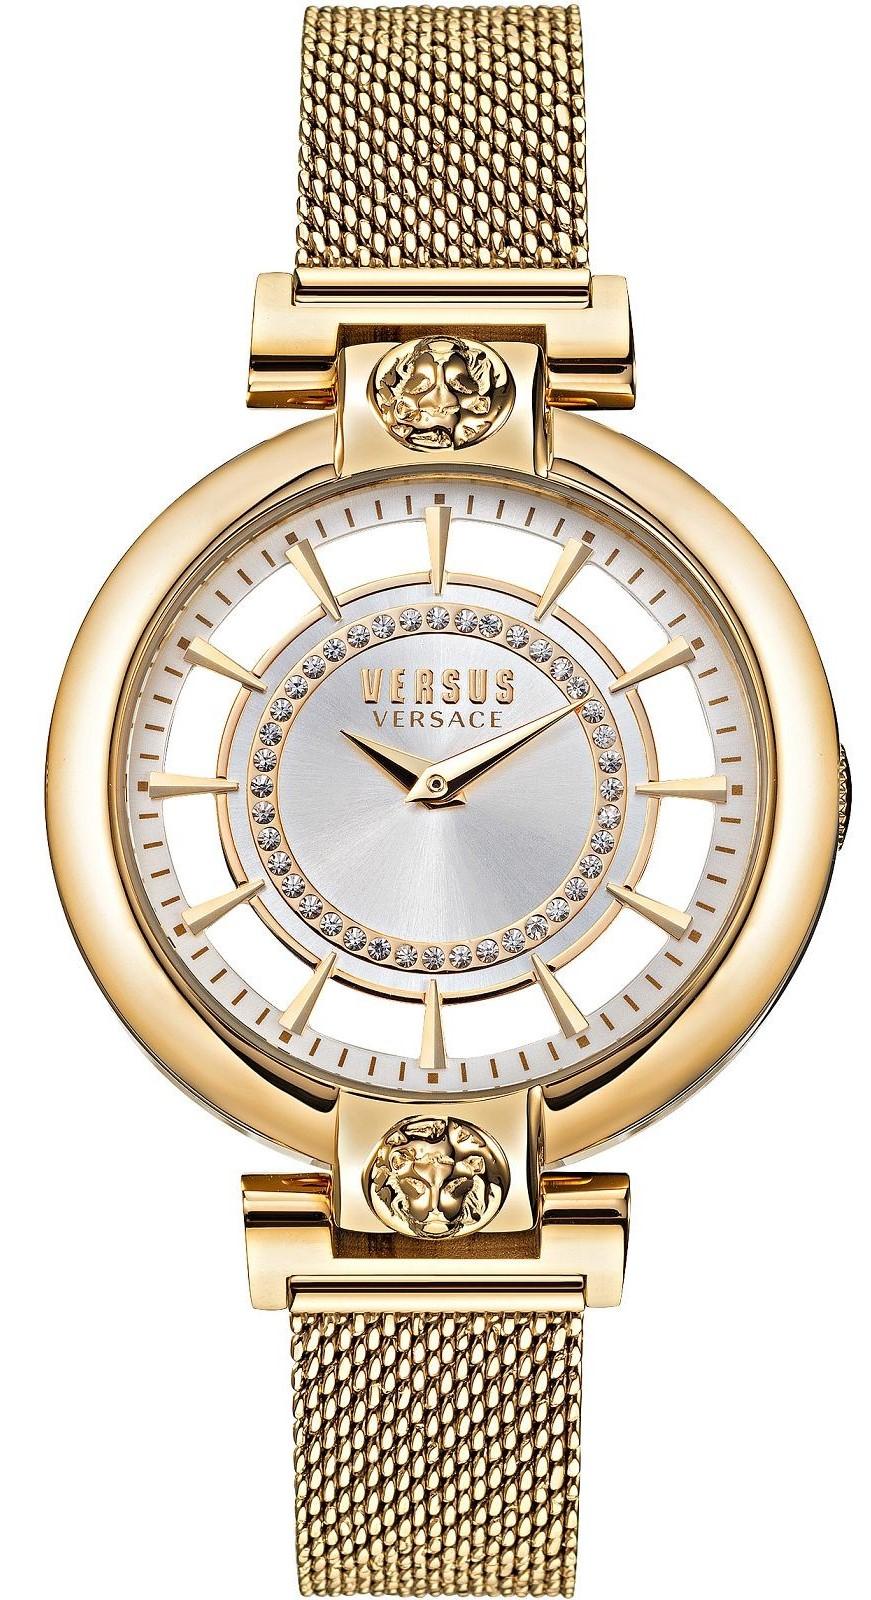 versace versus crystals ladies vsp1h0621 gold case with stainless steel bracelet image1